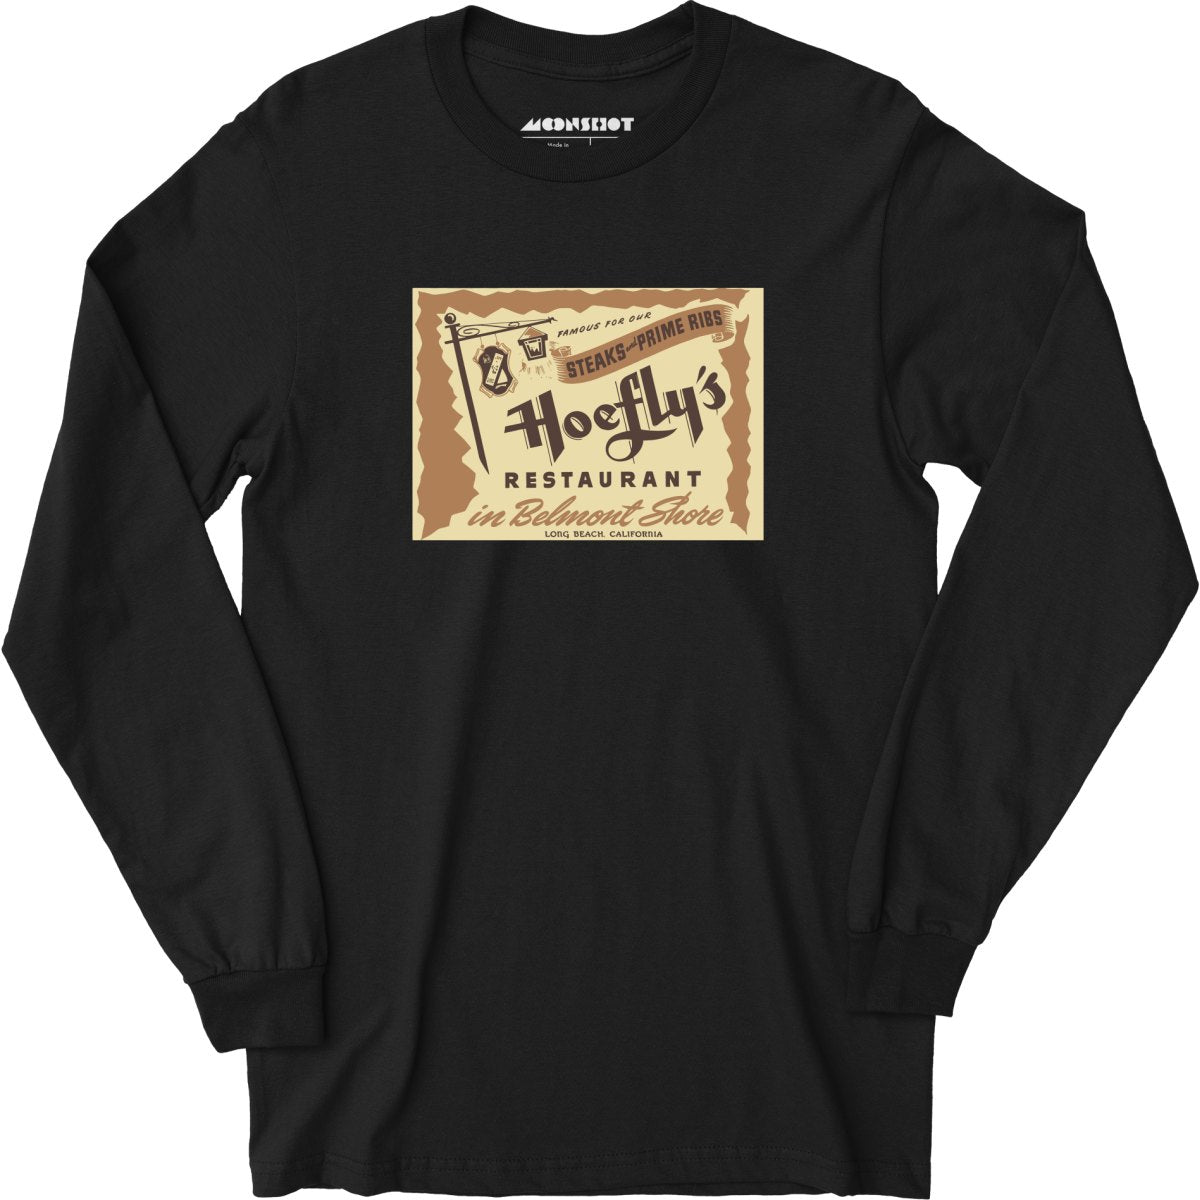 Hoefly's - Belmont Shore, CA - Vintage Restaurant - Long Sleeve T-Shirt